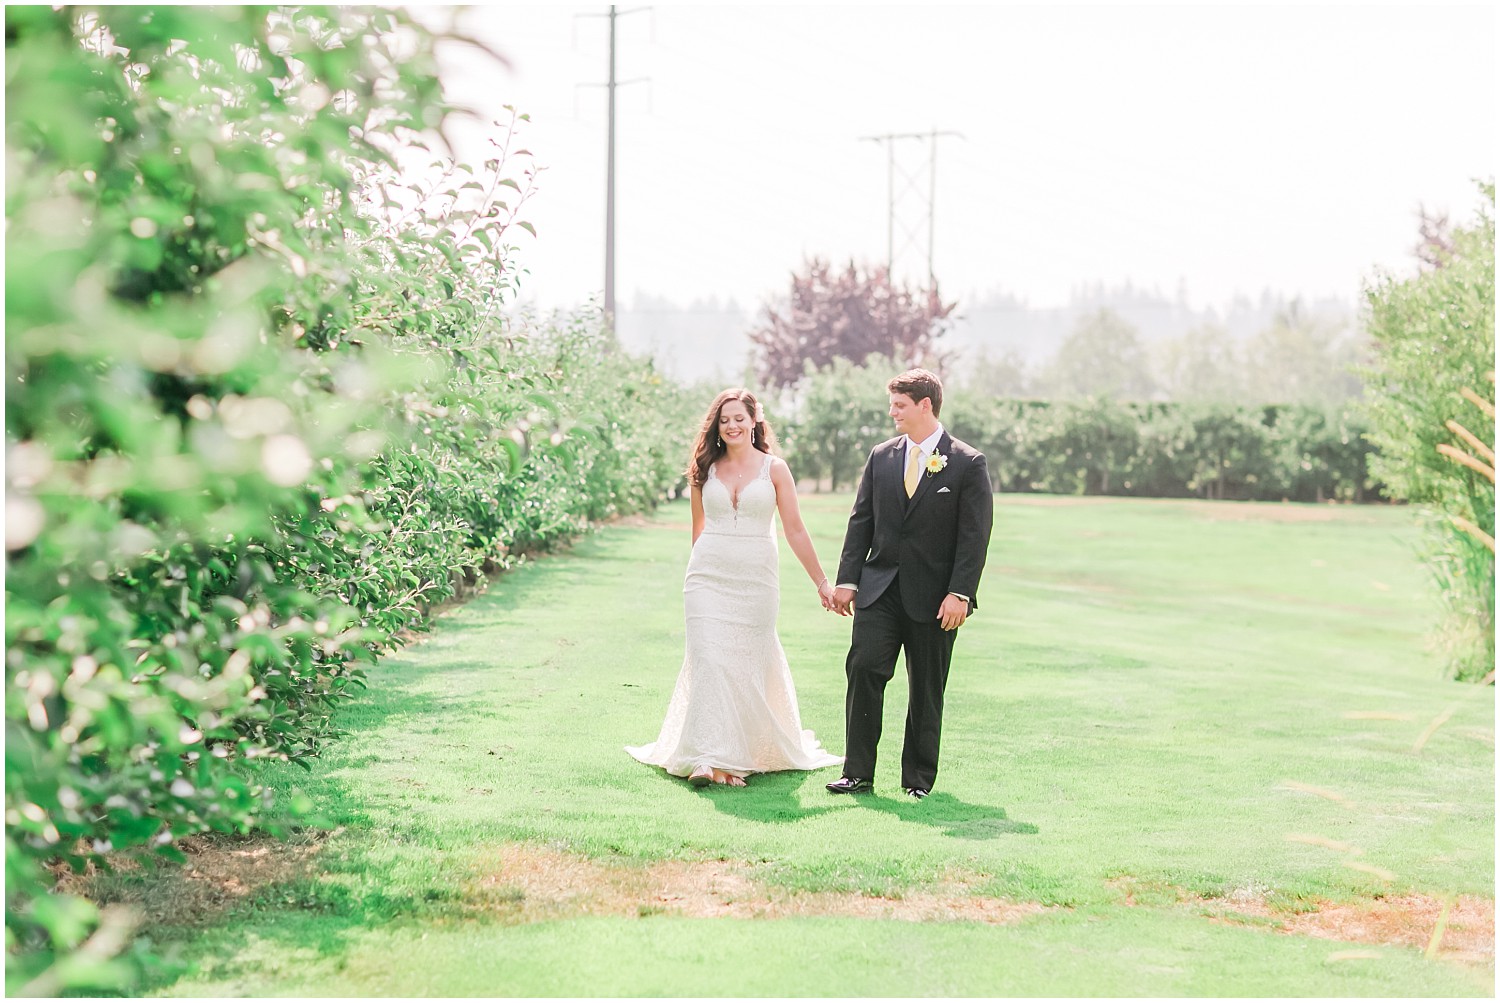 Swans Trail Farm Wedding | Charlie & Kyleann